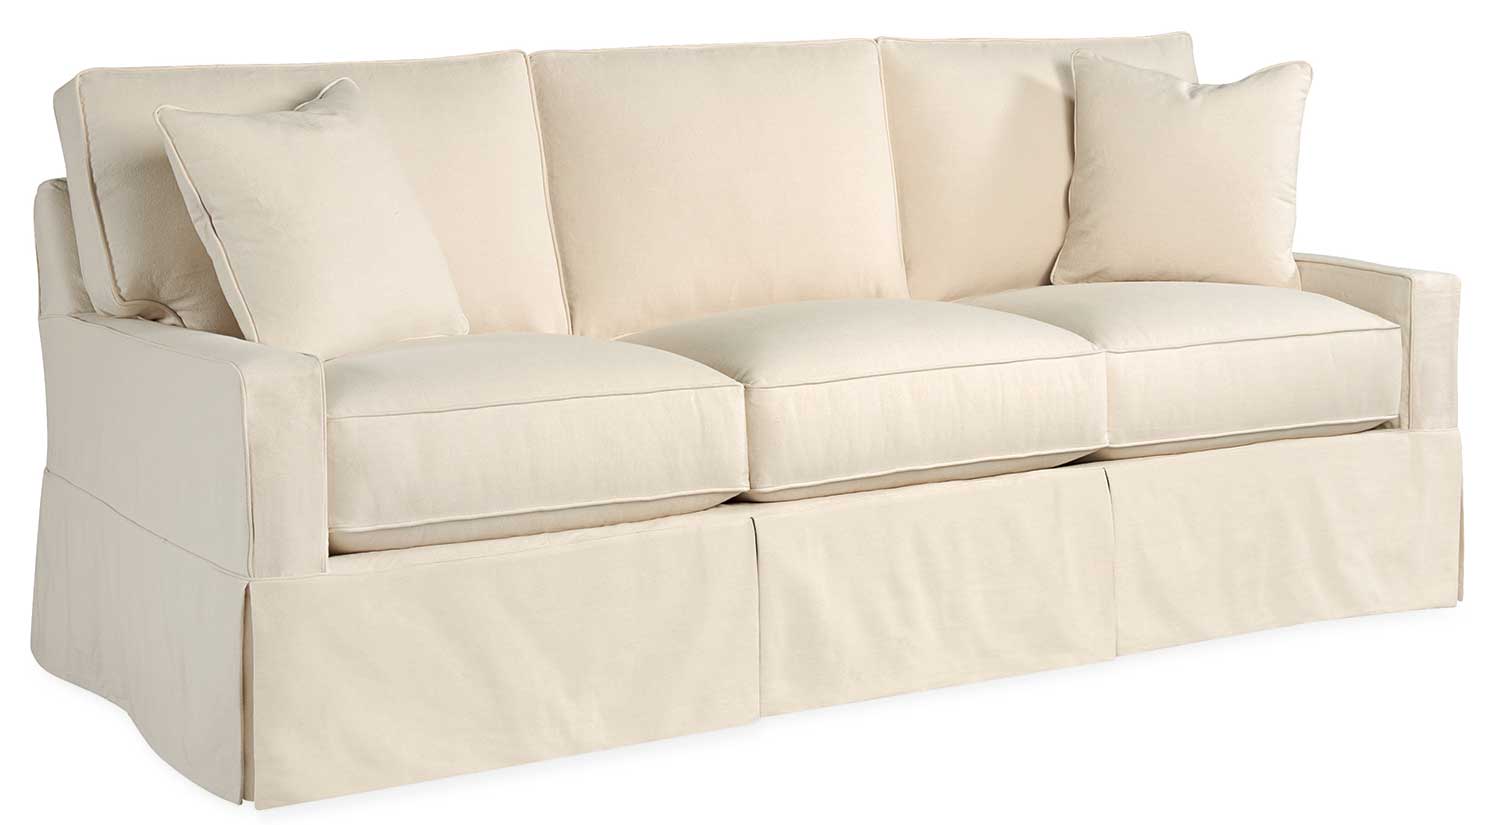 Furniture Slipcovers For Sofas